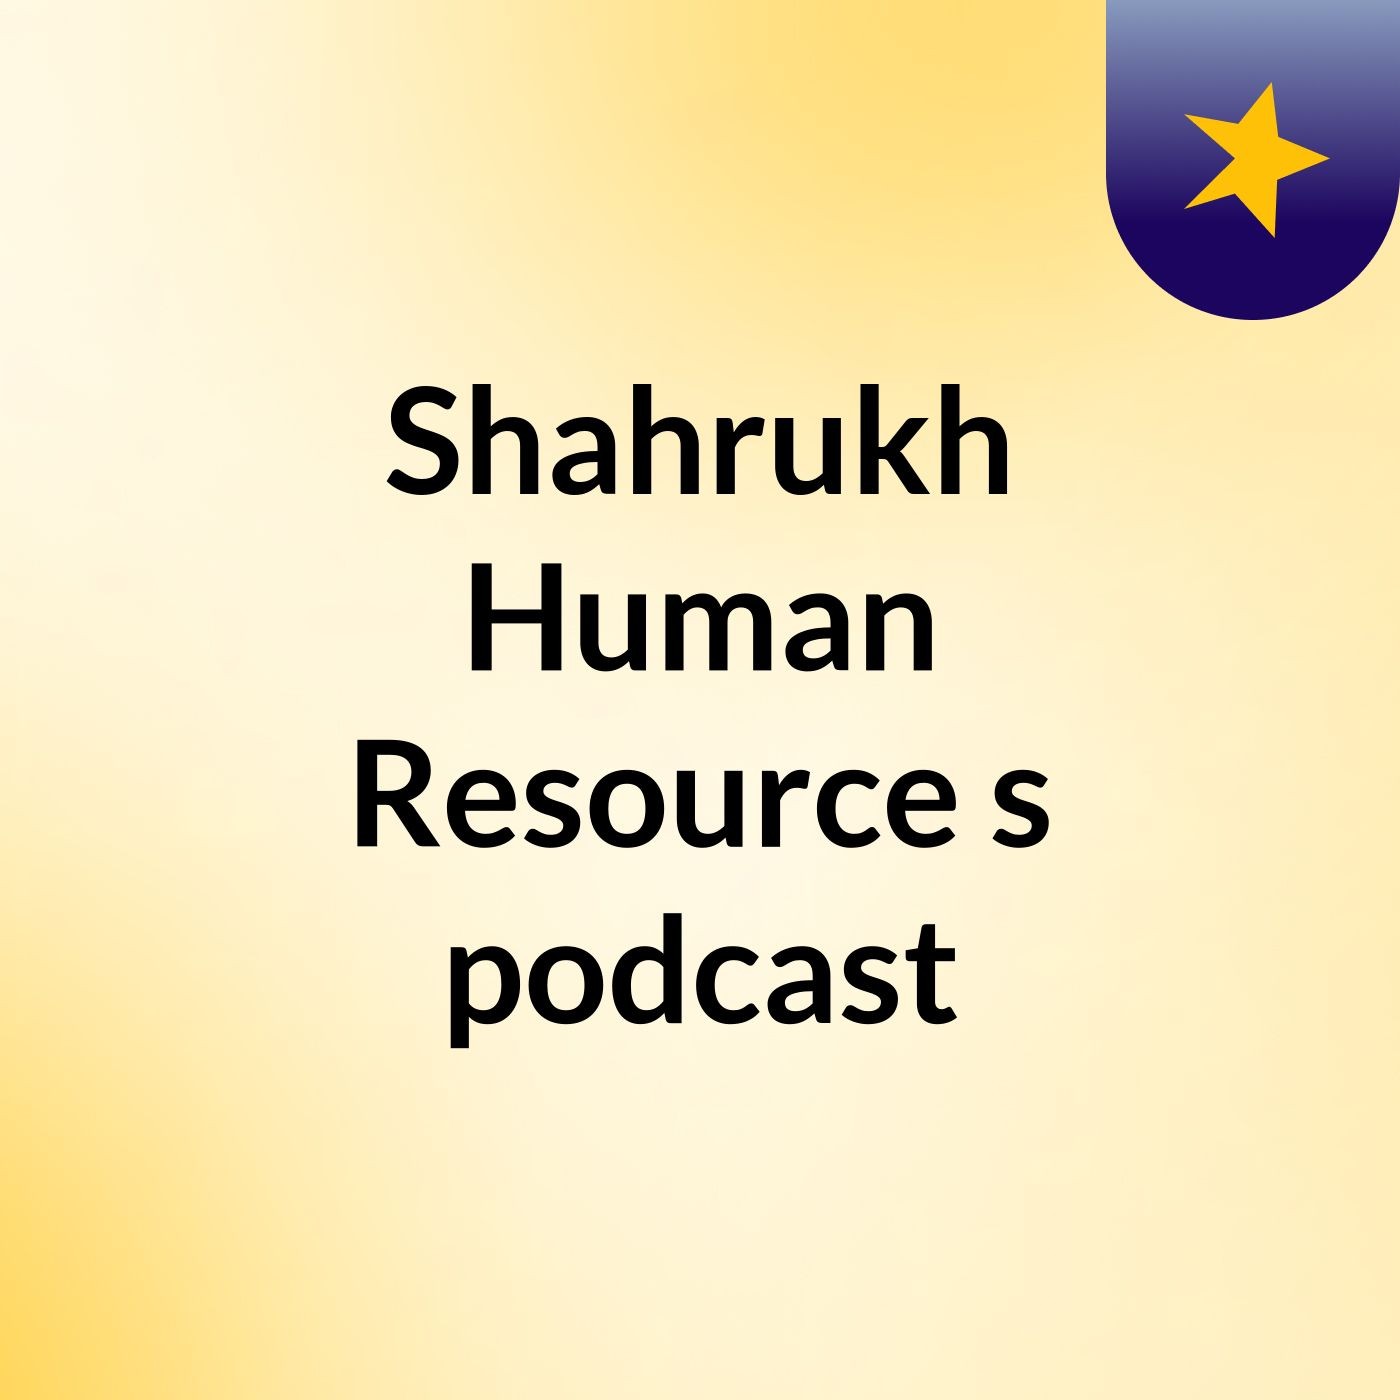 Episode 2 - Shahrukh Human Resource's podcast